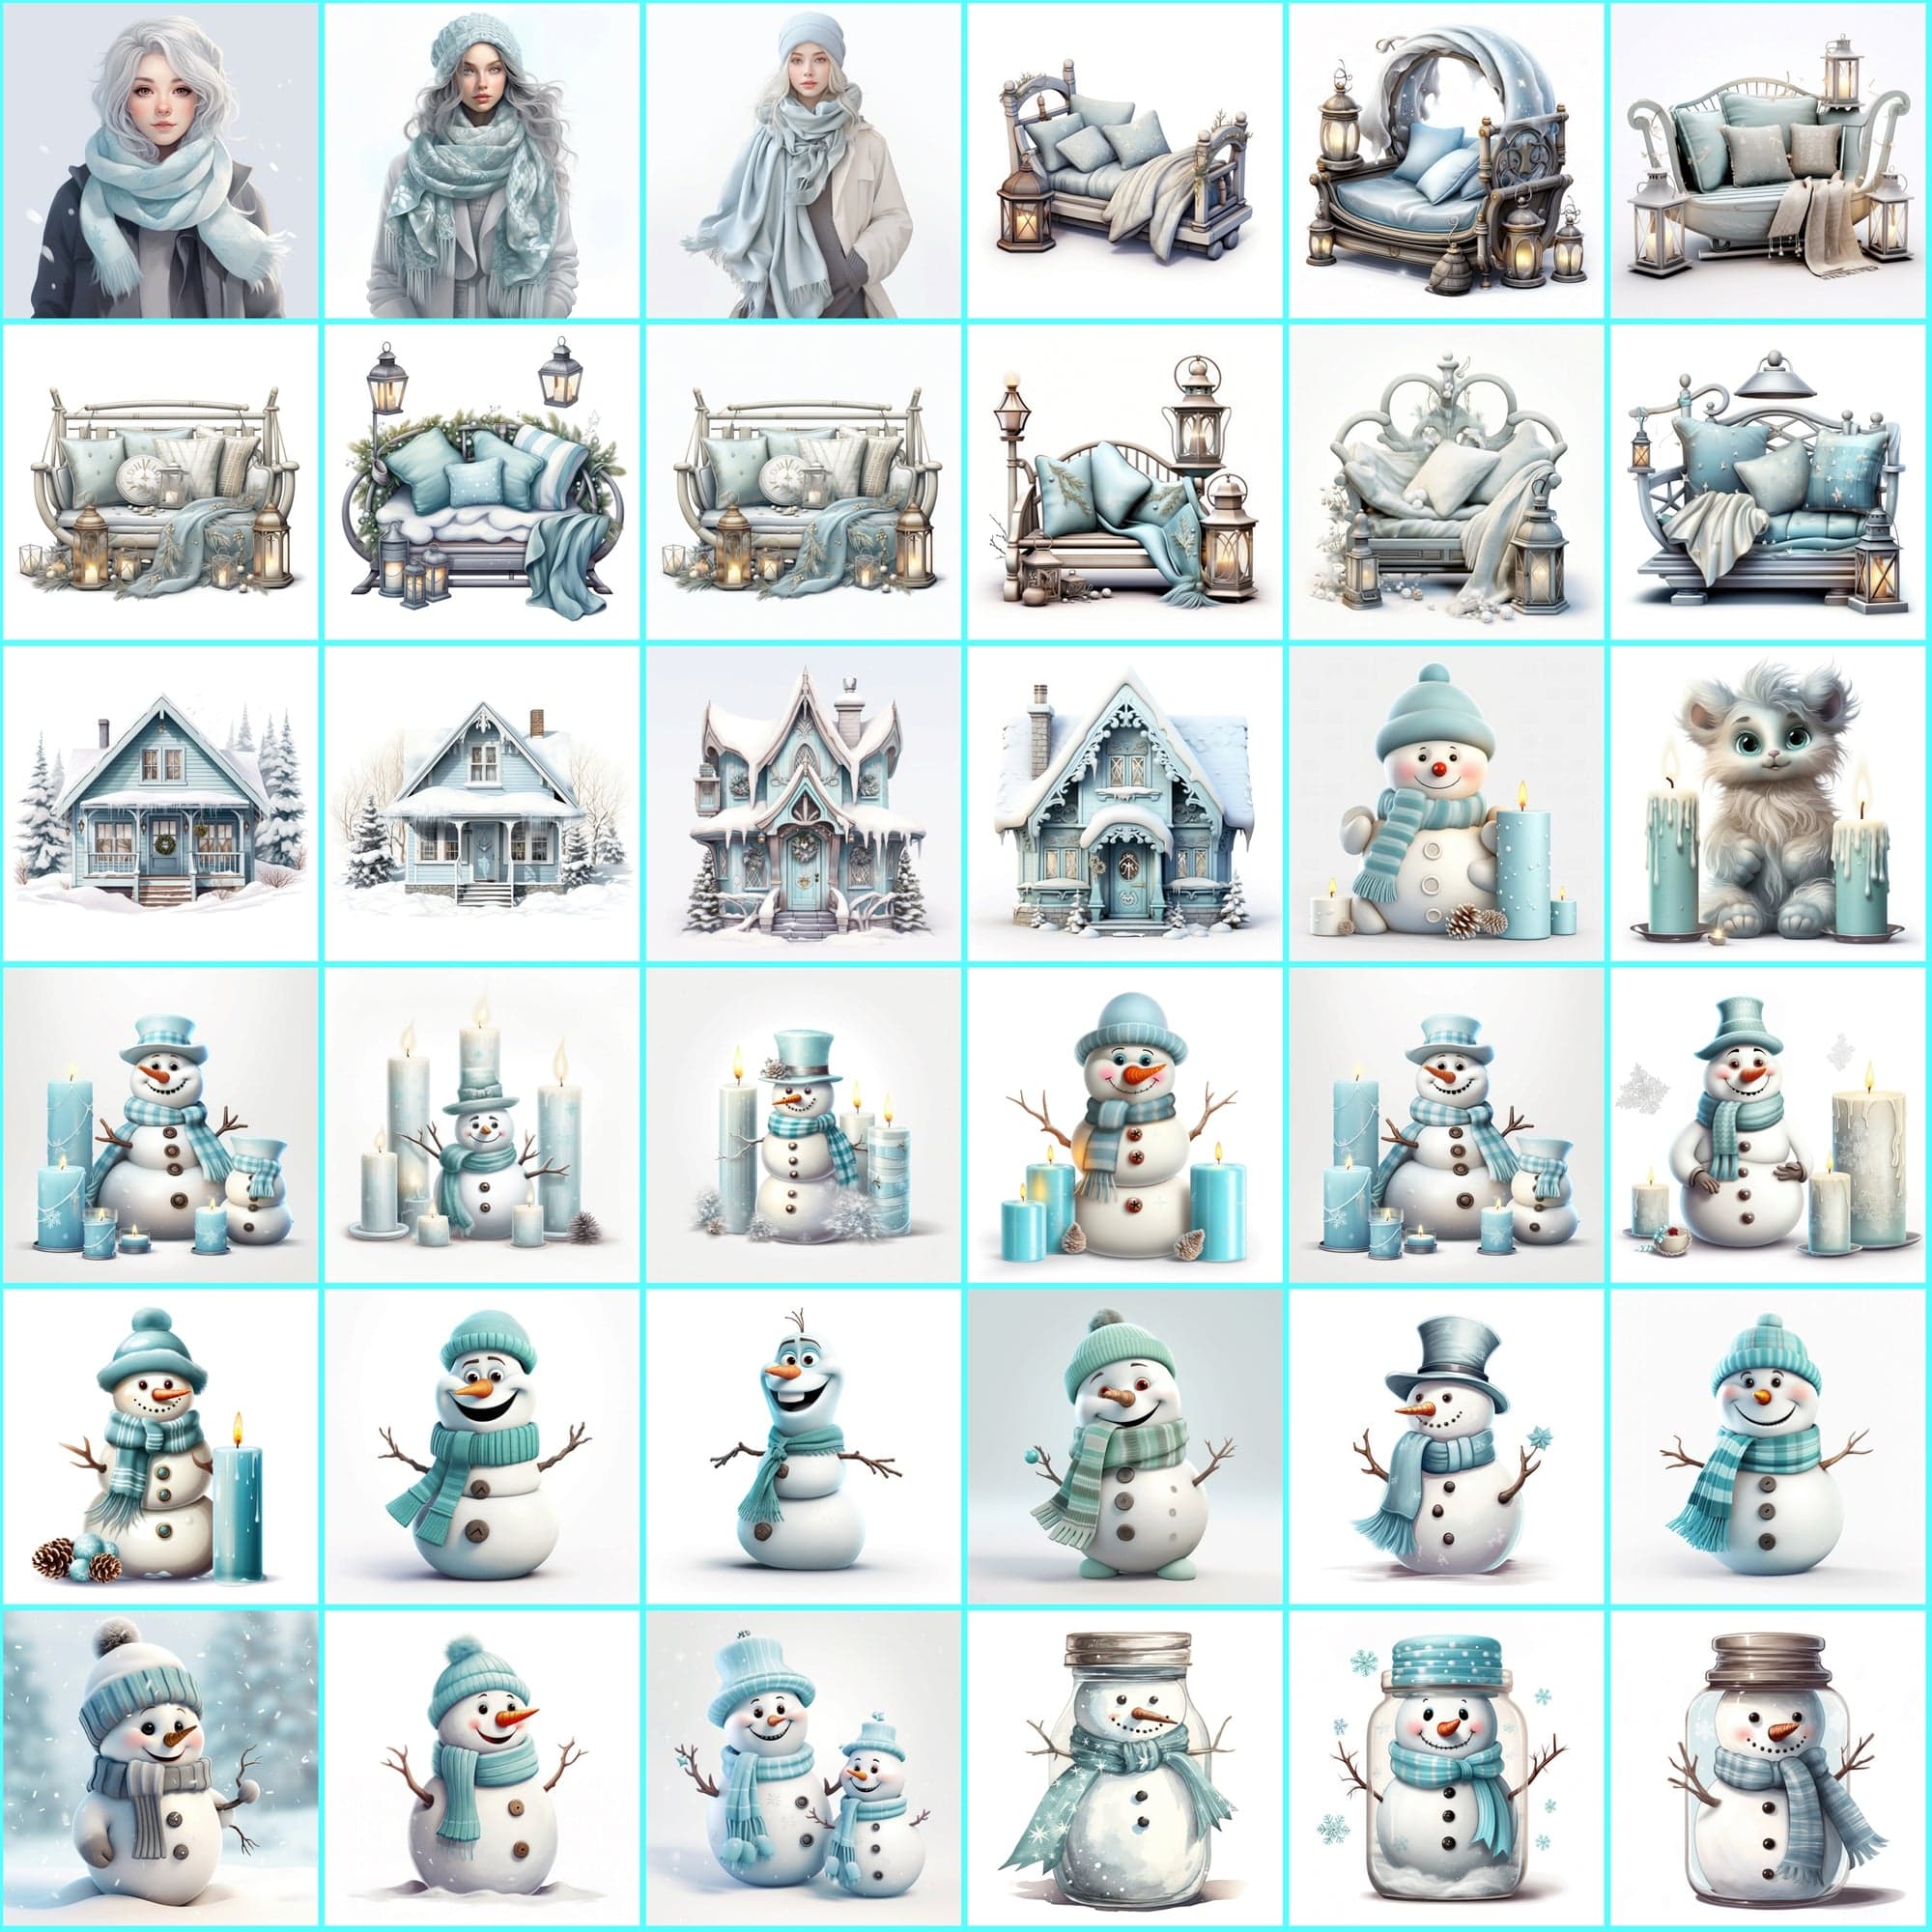 Turquoise Christmas Images: 340 PNG Image Bundle with Commercial License Digital Download Sumobundle